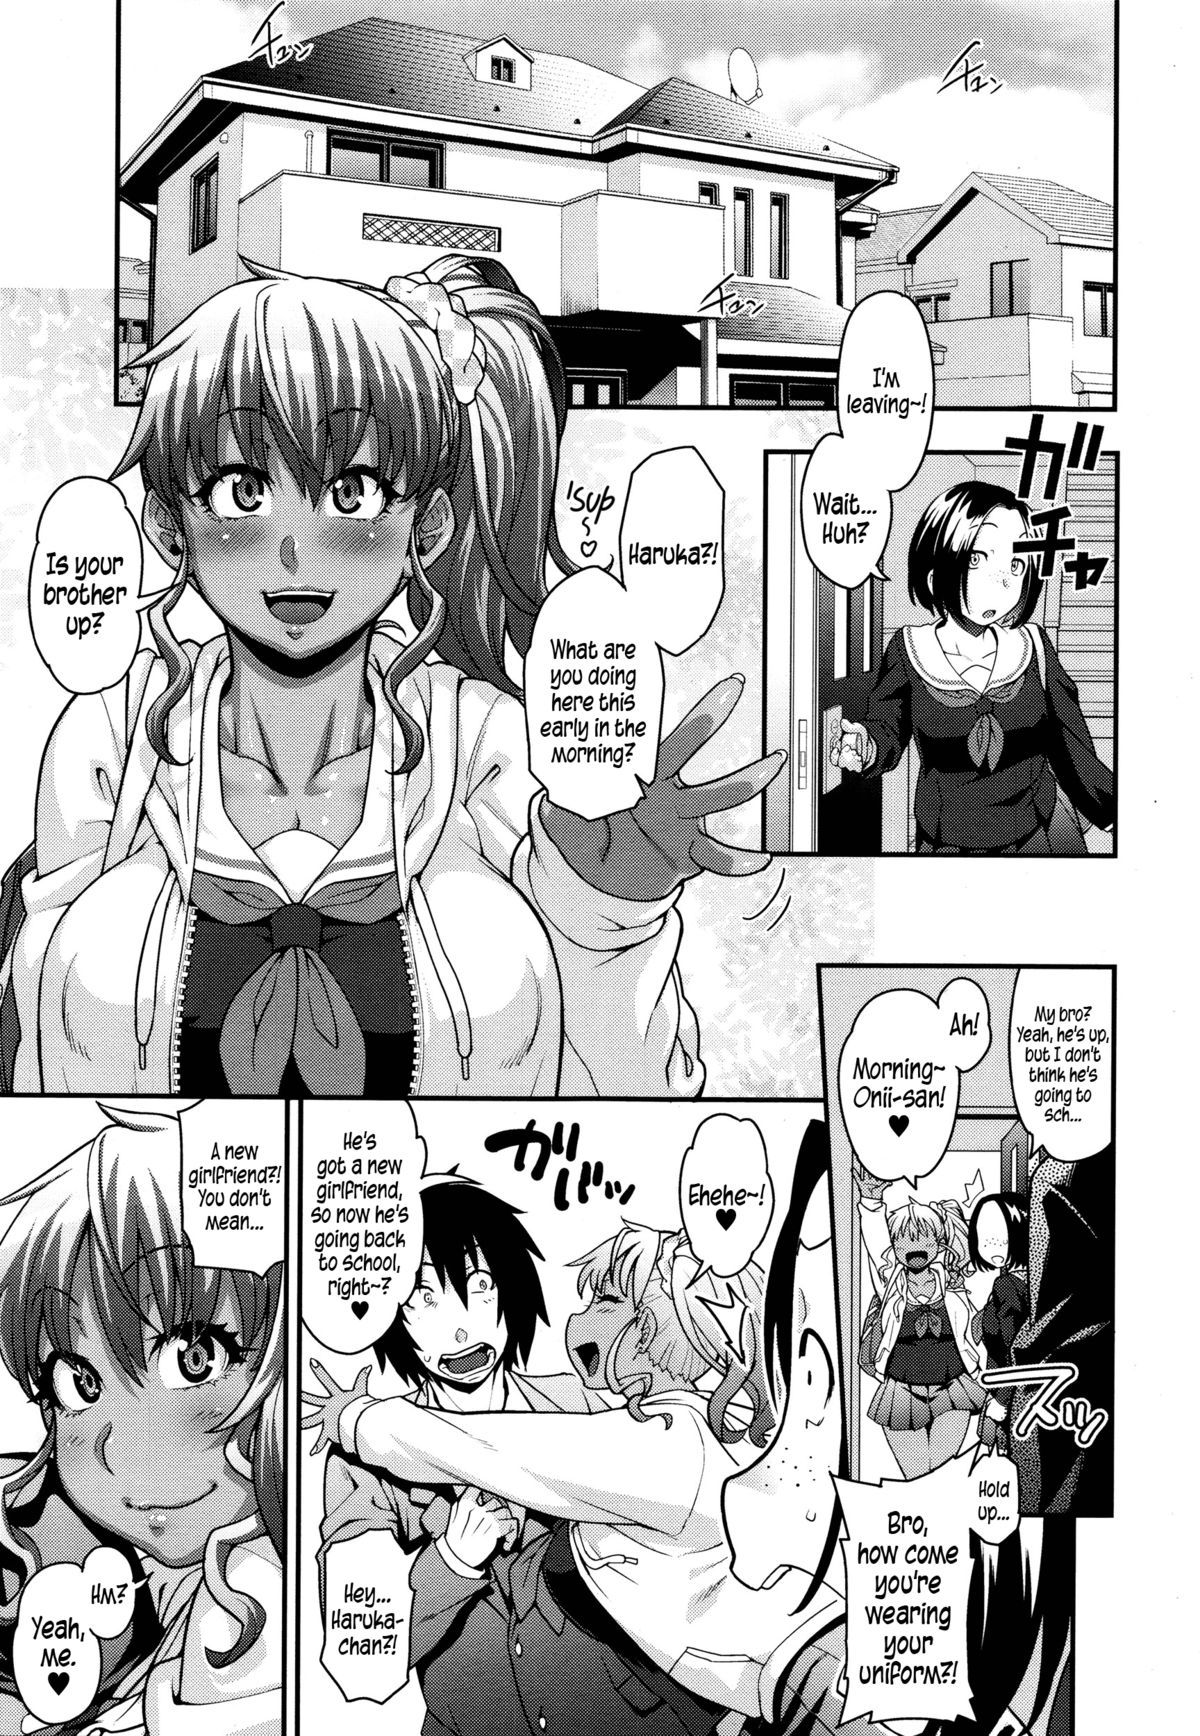 ah-manga:  [Jun] FEEL SO ASS part 2 part 1 more hentai manga posts 